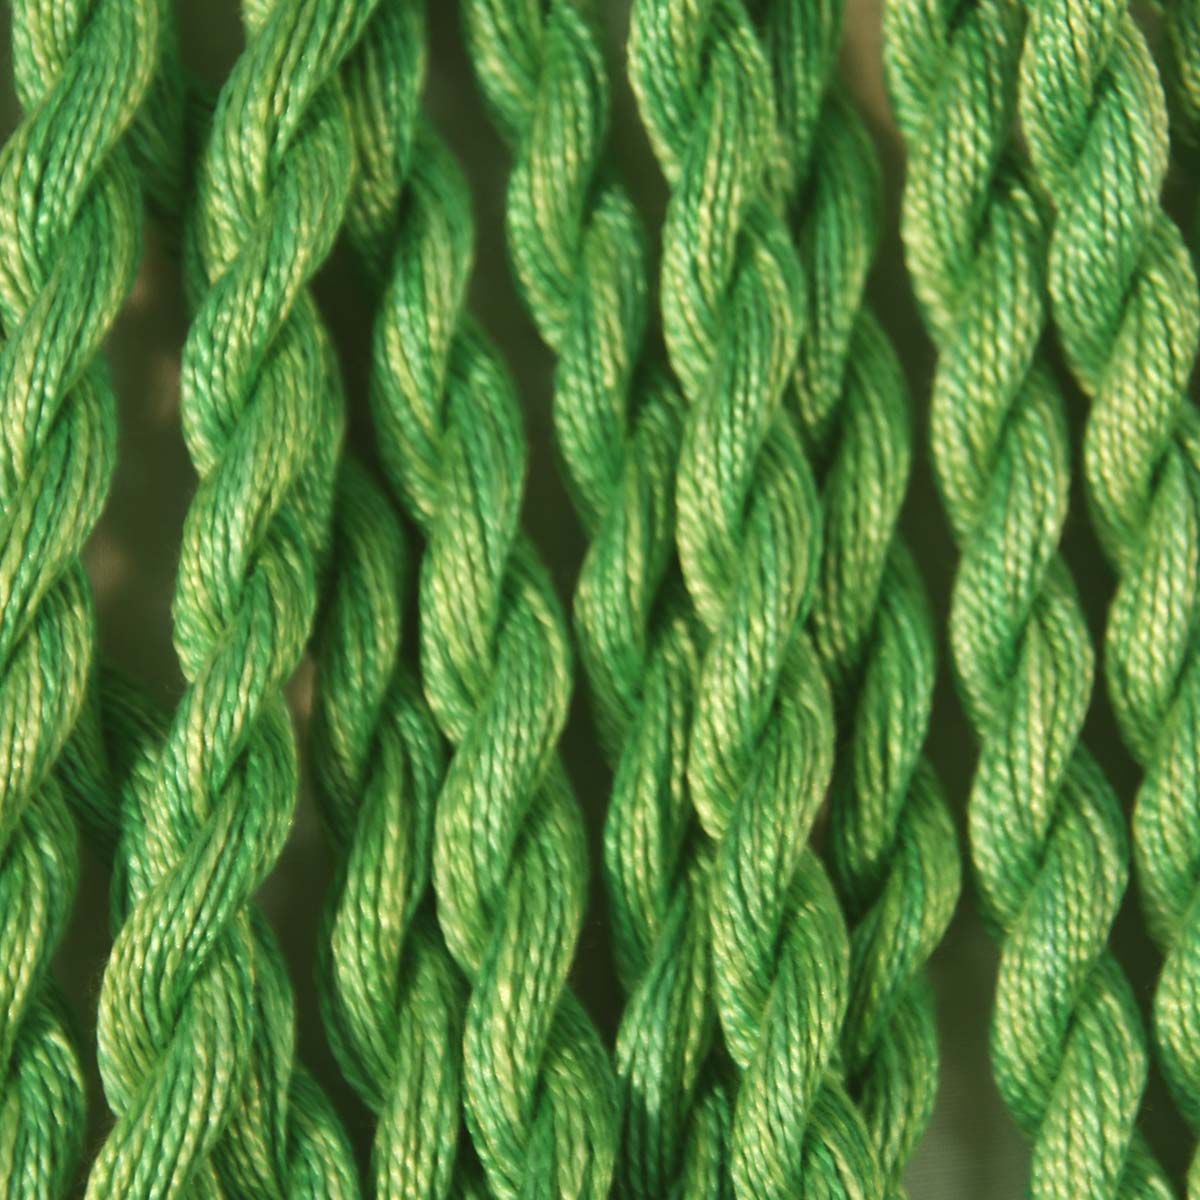 www.colourstreams.com.au Colour Streams Hand Dyed Cotton Threads Cotto Strands Slow Stitch Embroidery Textile Arts Fibre DL 19 Verde Greens